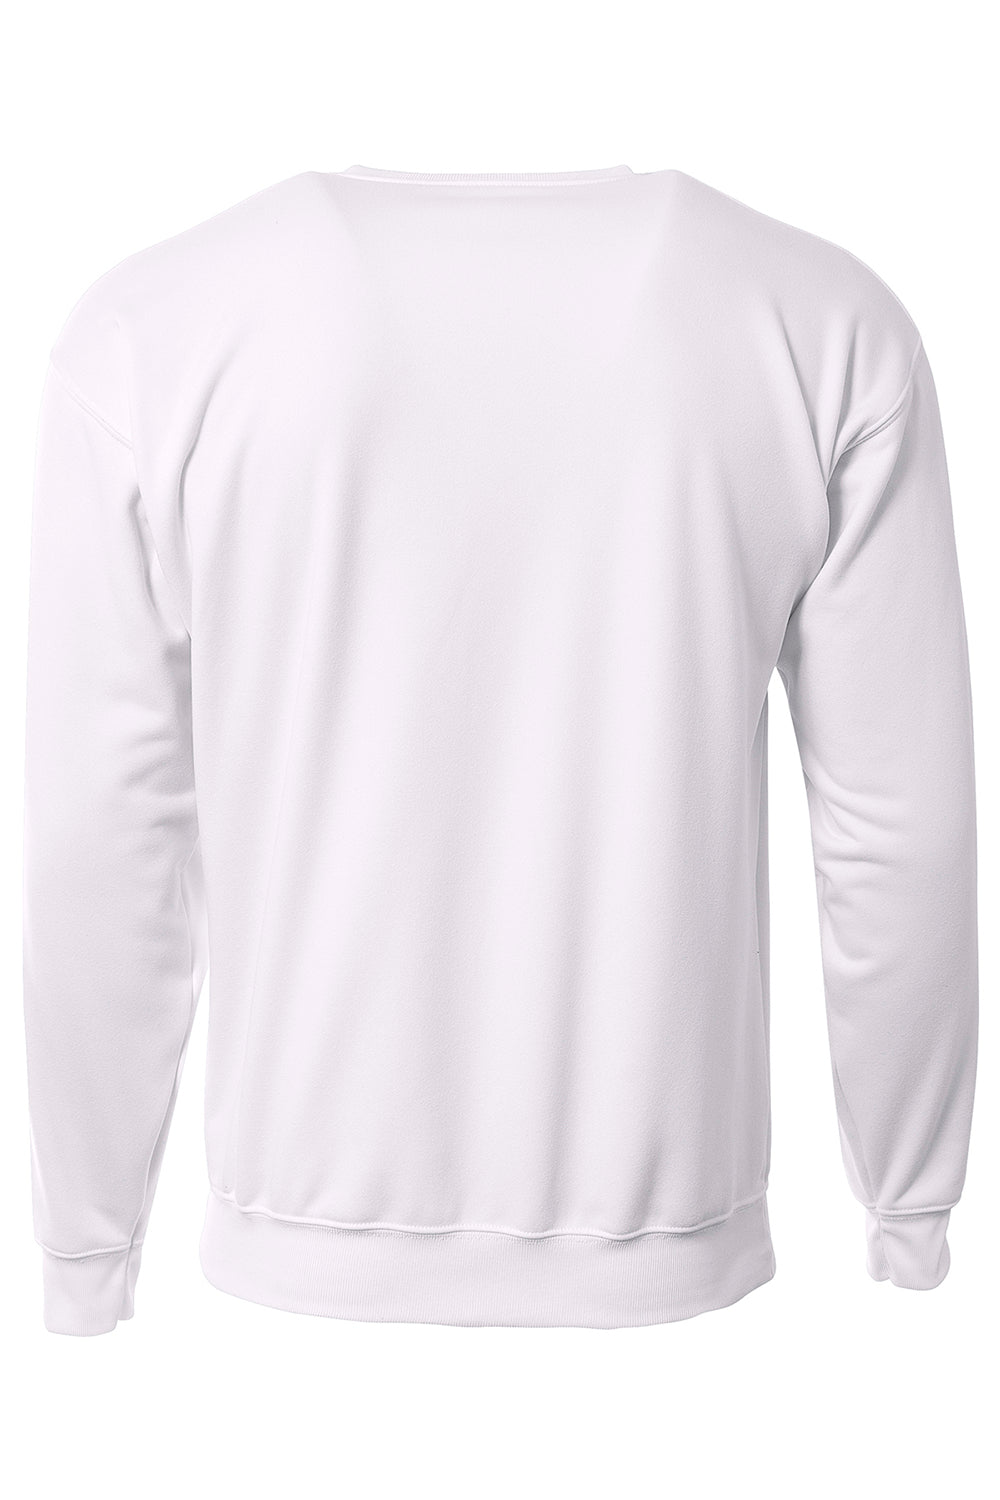 A4 N4275 Mens Sprint Tech Fleece Crewneck Sweatshirt White Flat Back